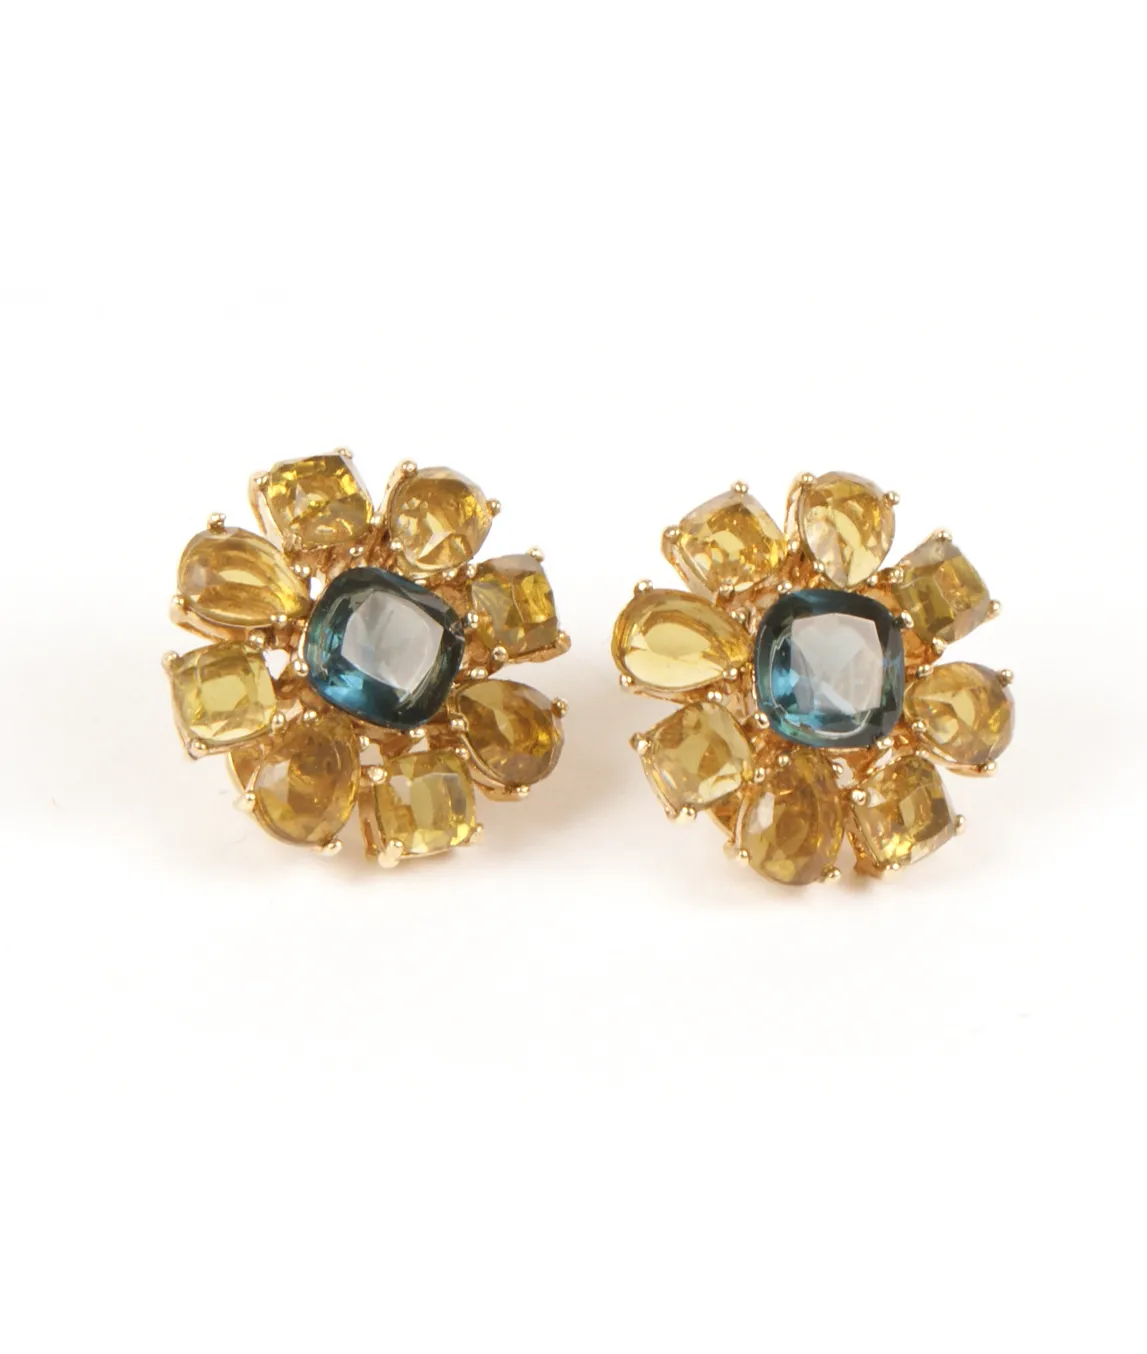 Monet Green and Blue crystal flower earrings 